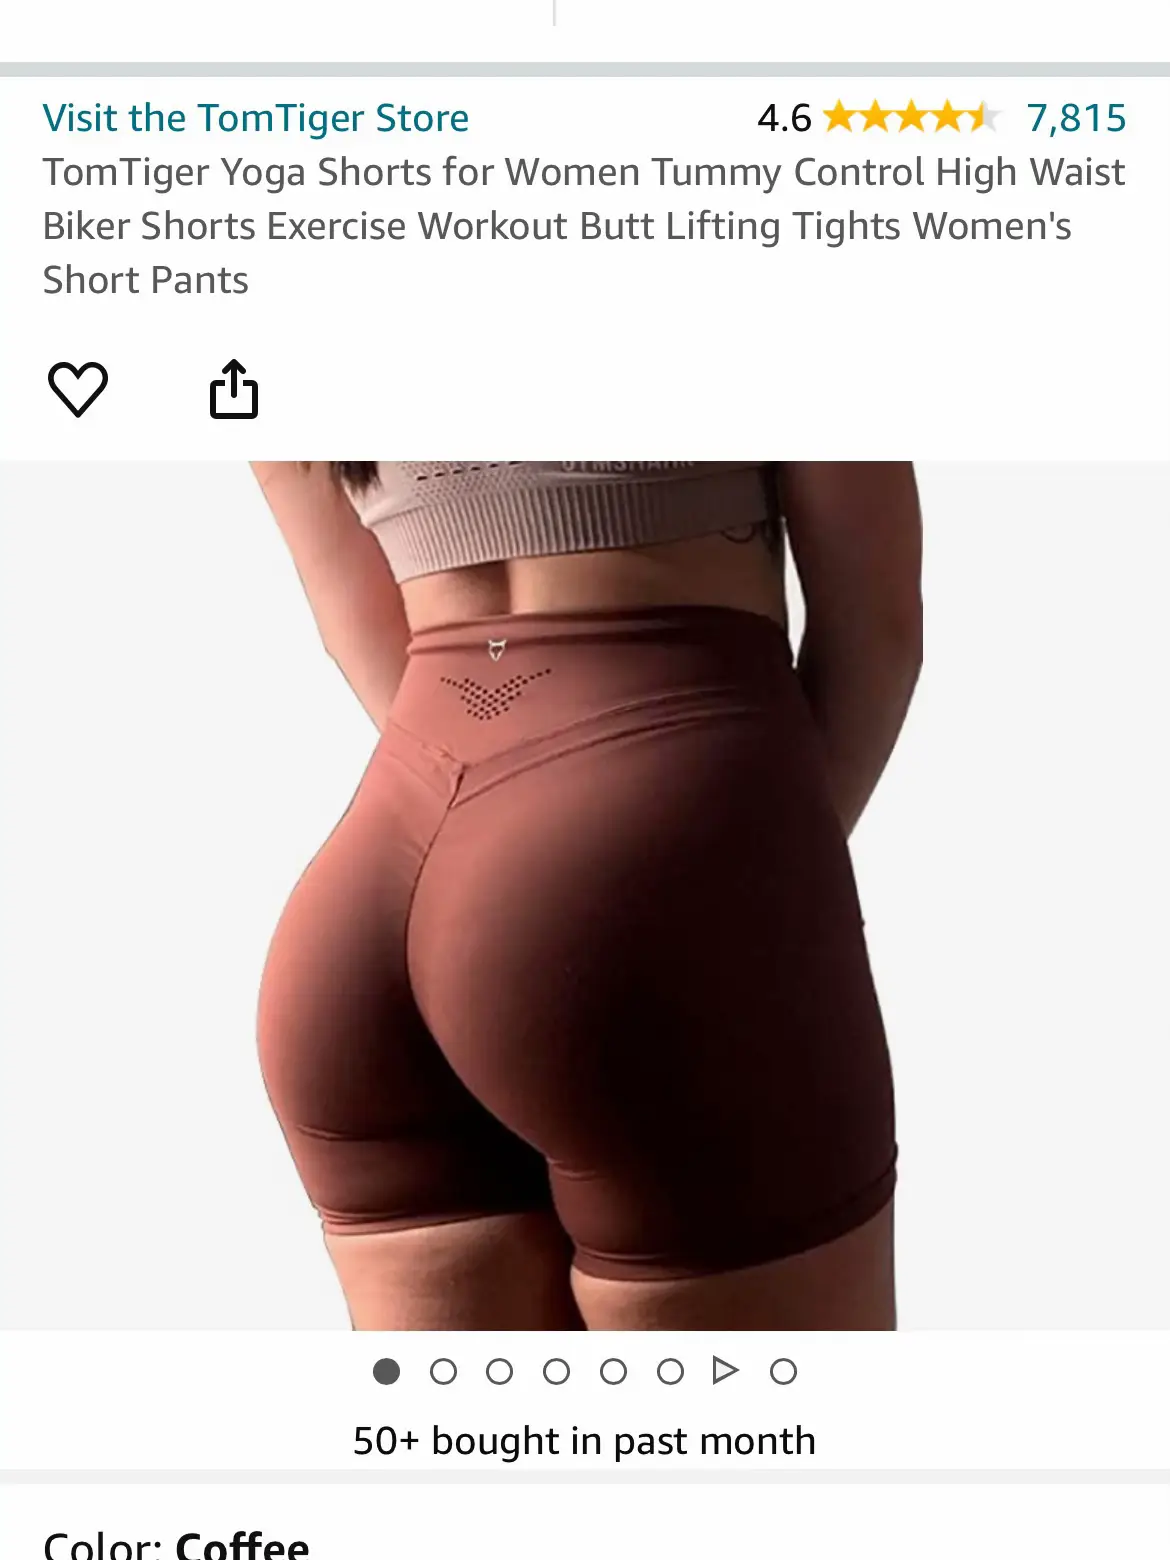 TomTiger Yoga Shorts for Women Tummy Control High Waist Biker